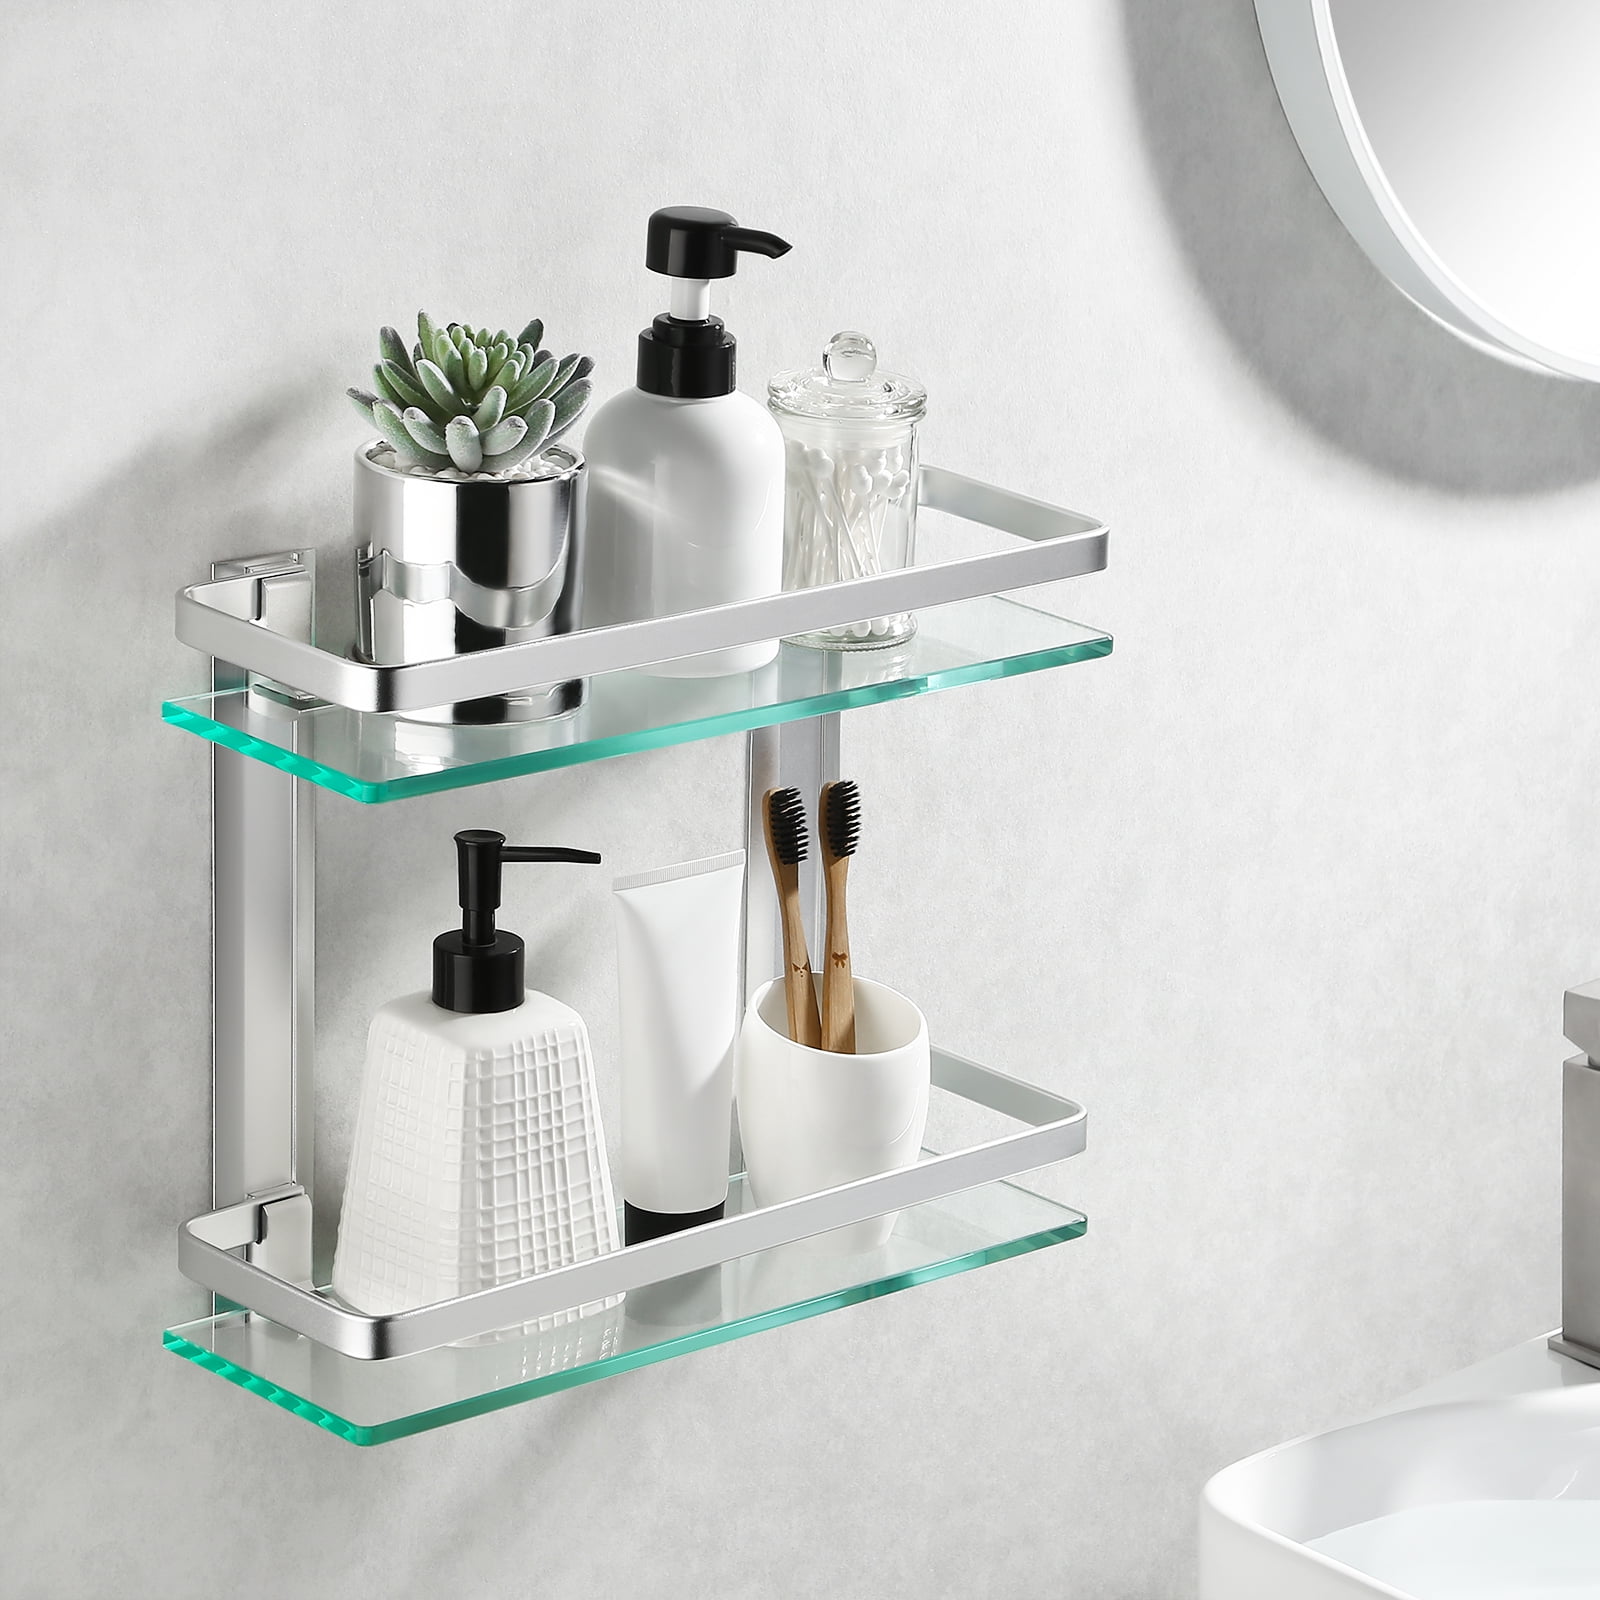 WAKLOND Bathroom Shelves, 2-Tier Glass Corner Shelf Wall Silver